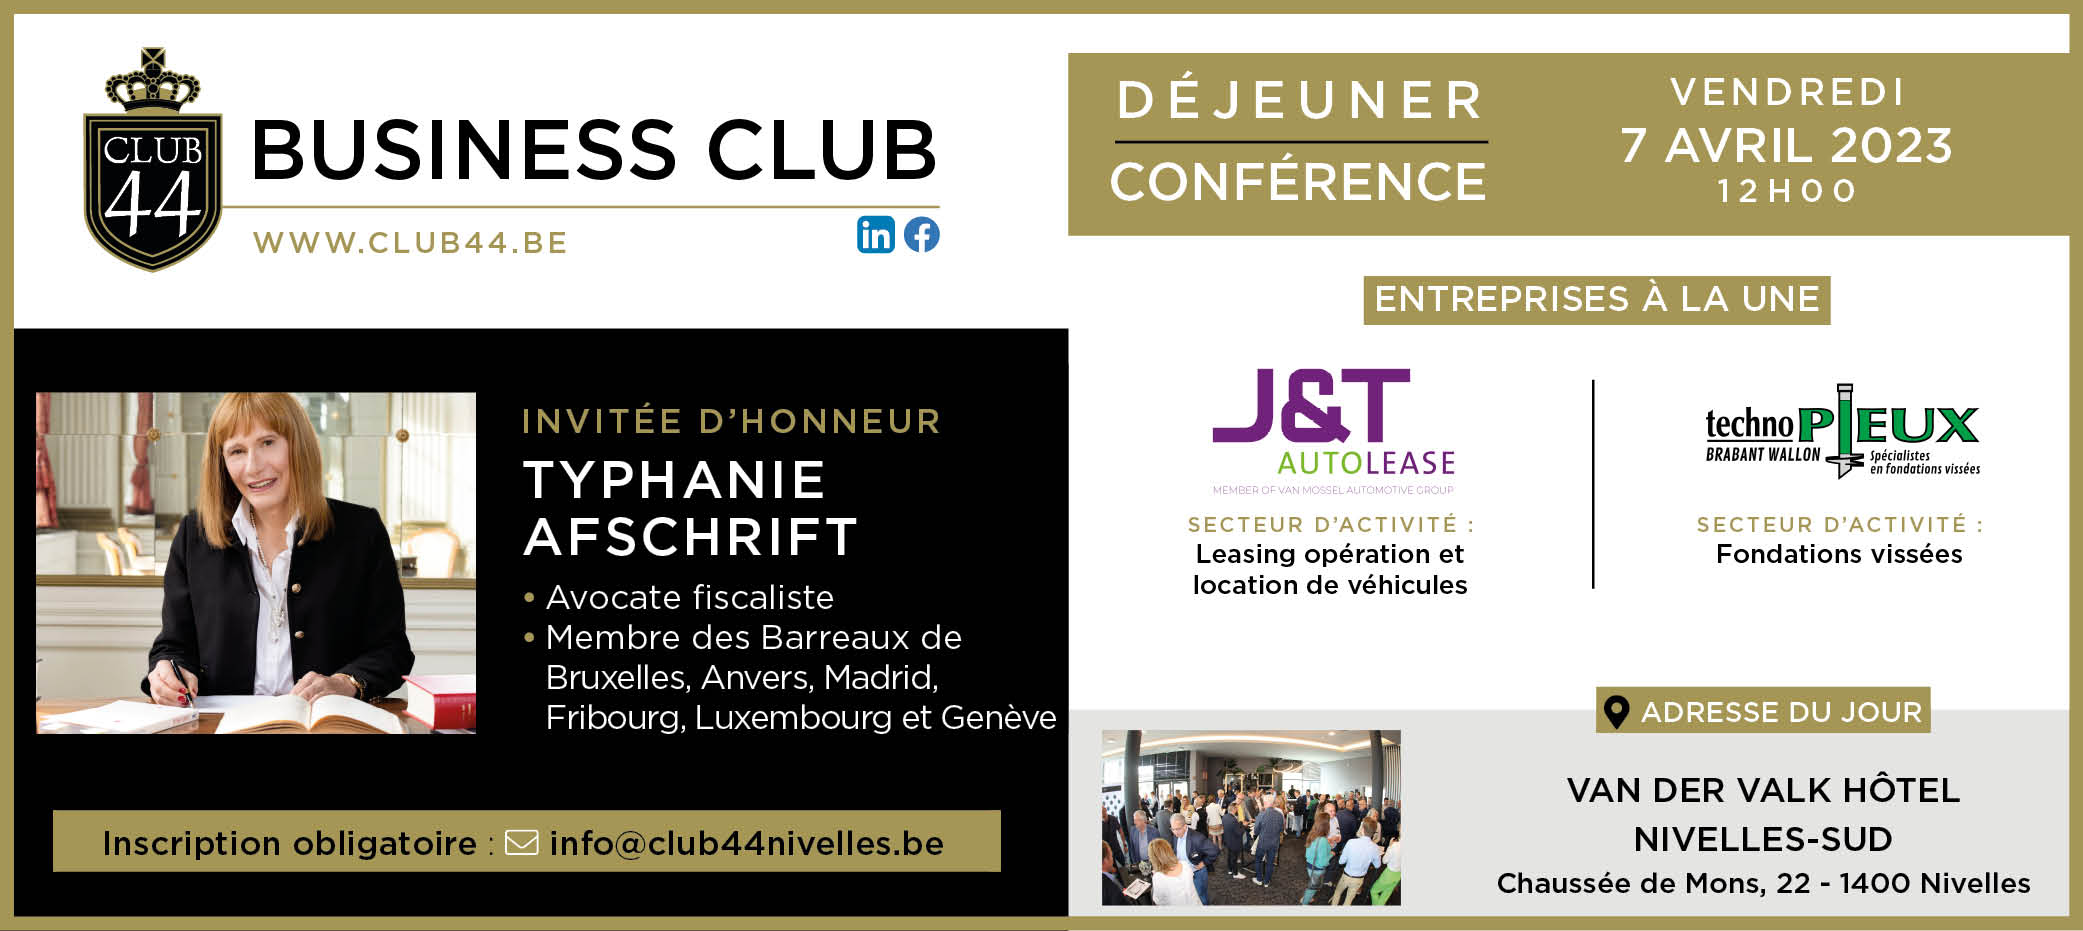 Déjeuner-Conférence Club 44 Nivelles (avril 2023)